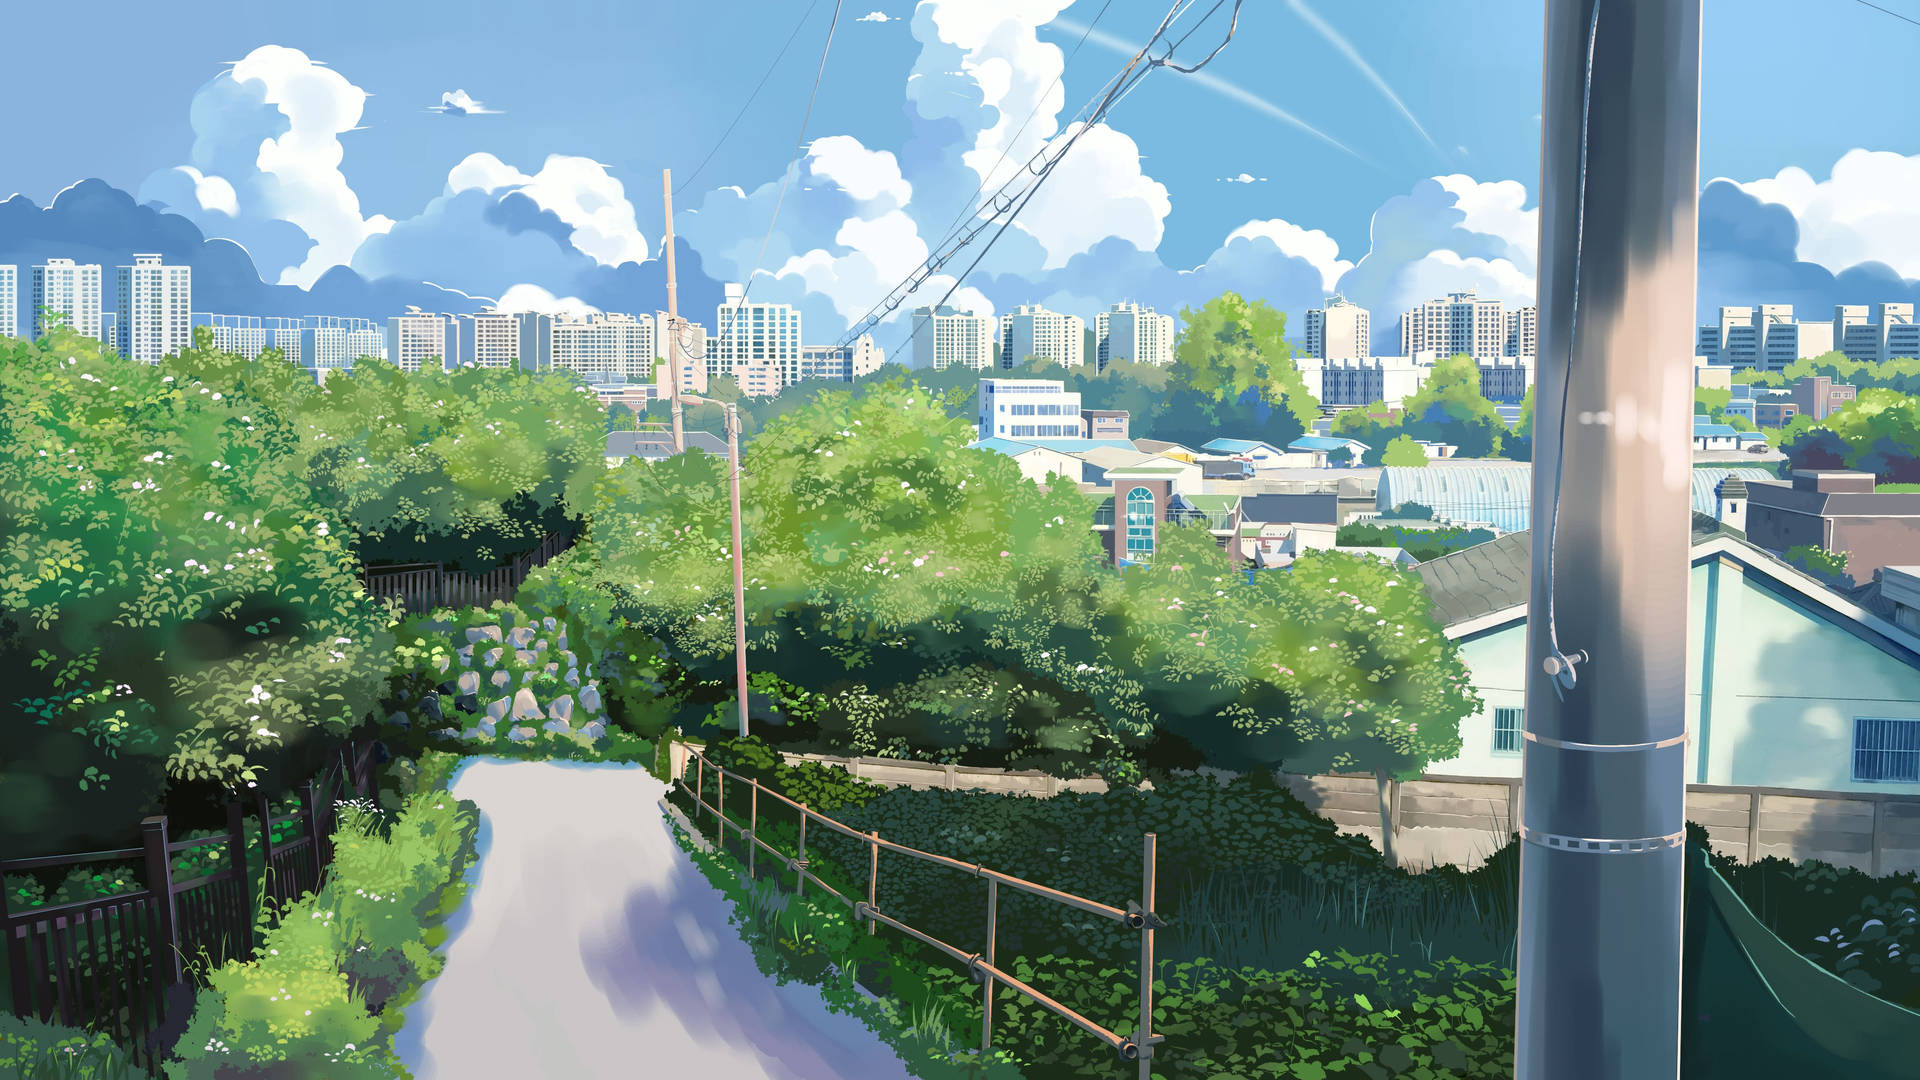 Green Anime City Wallpaper